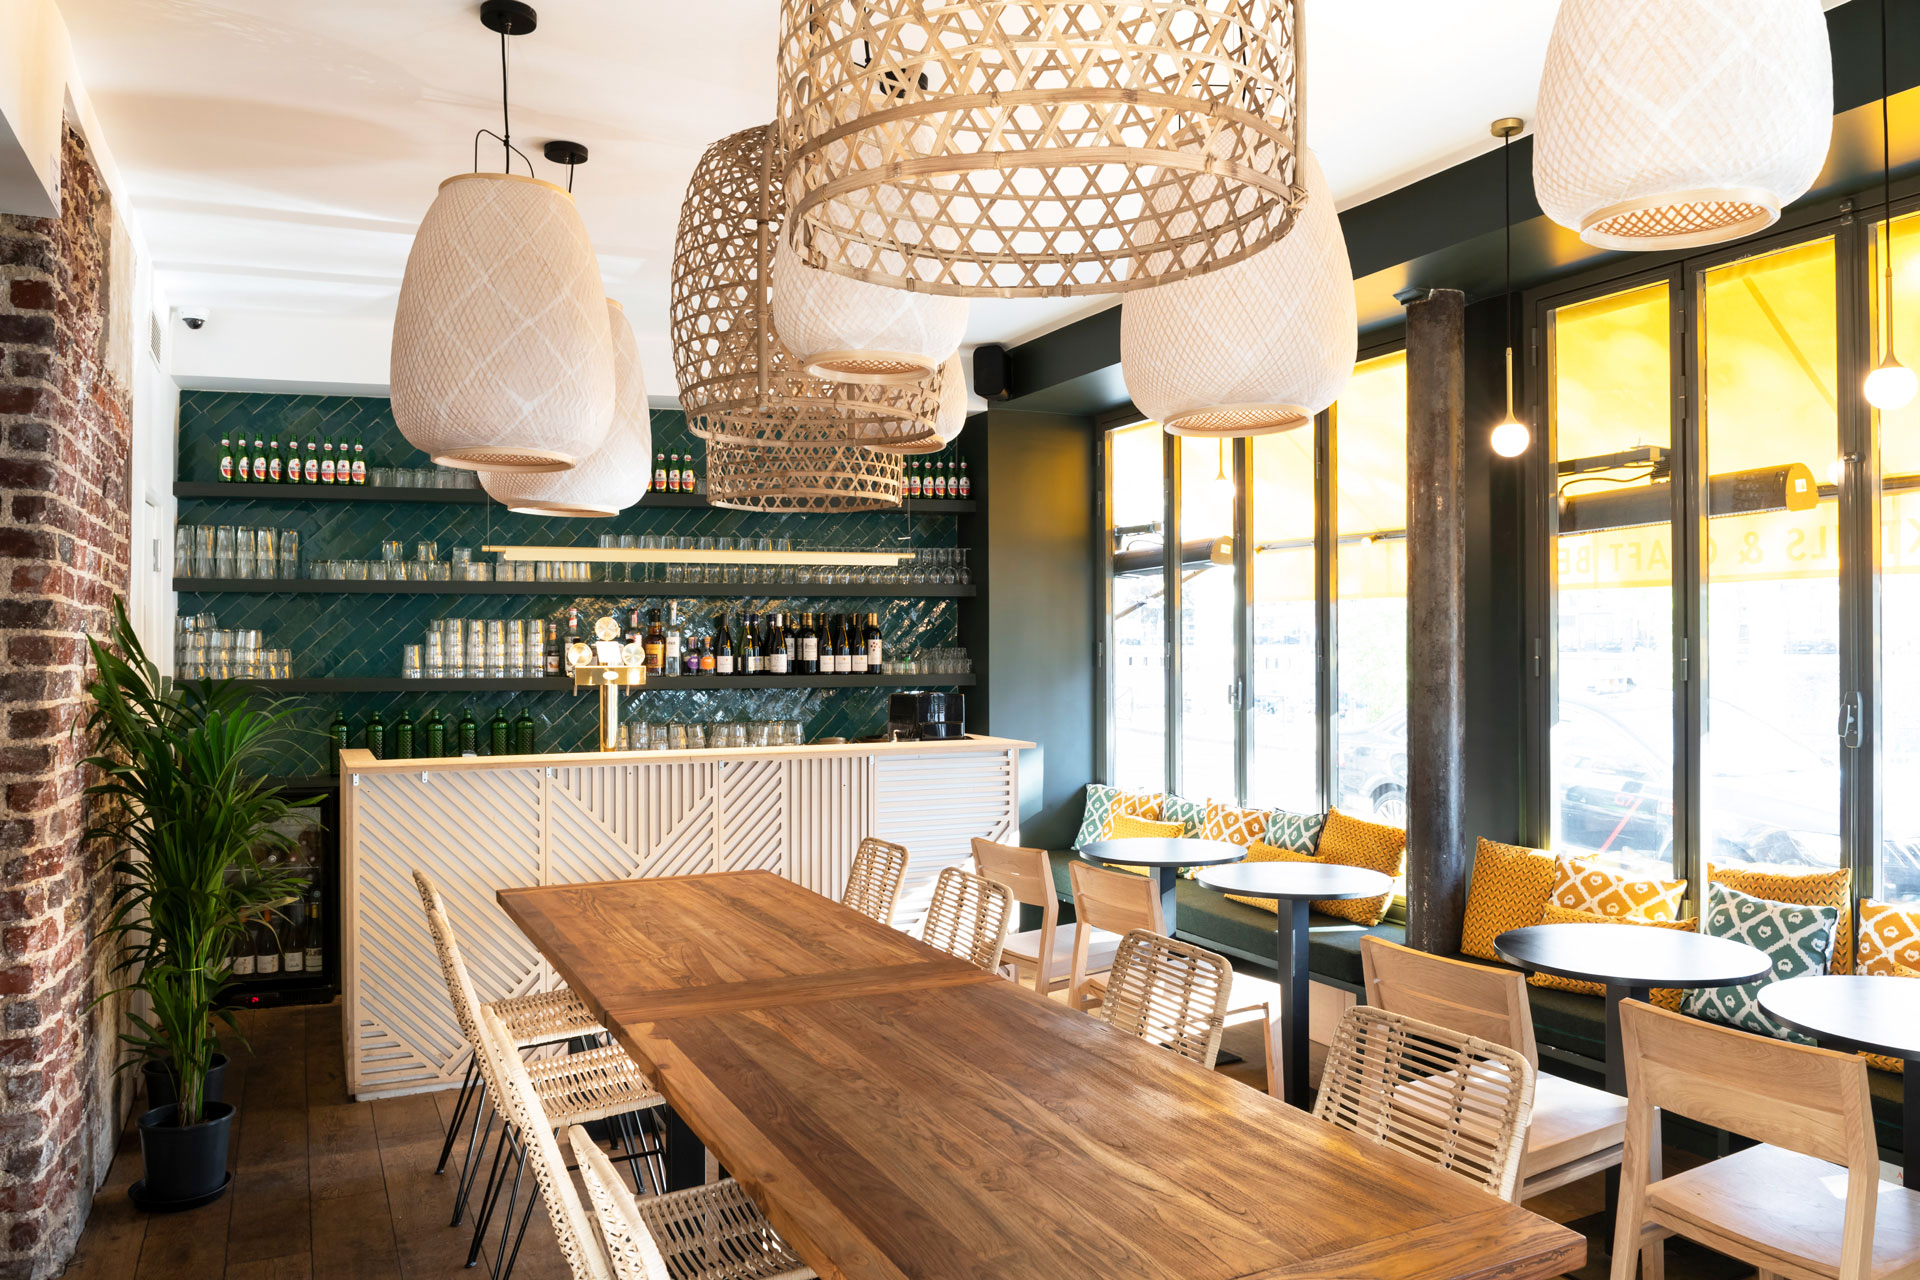 Djawa - restaurant - interior design - Paris - wood atmosphere - indonesian - counter